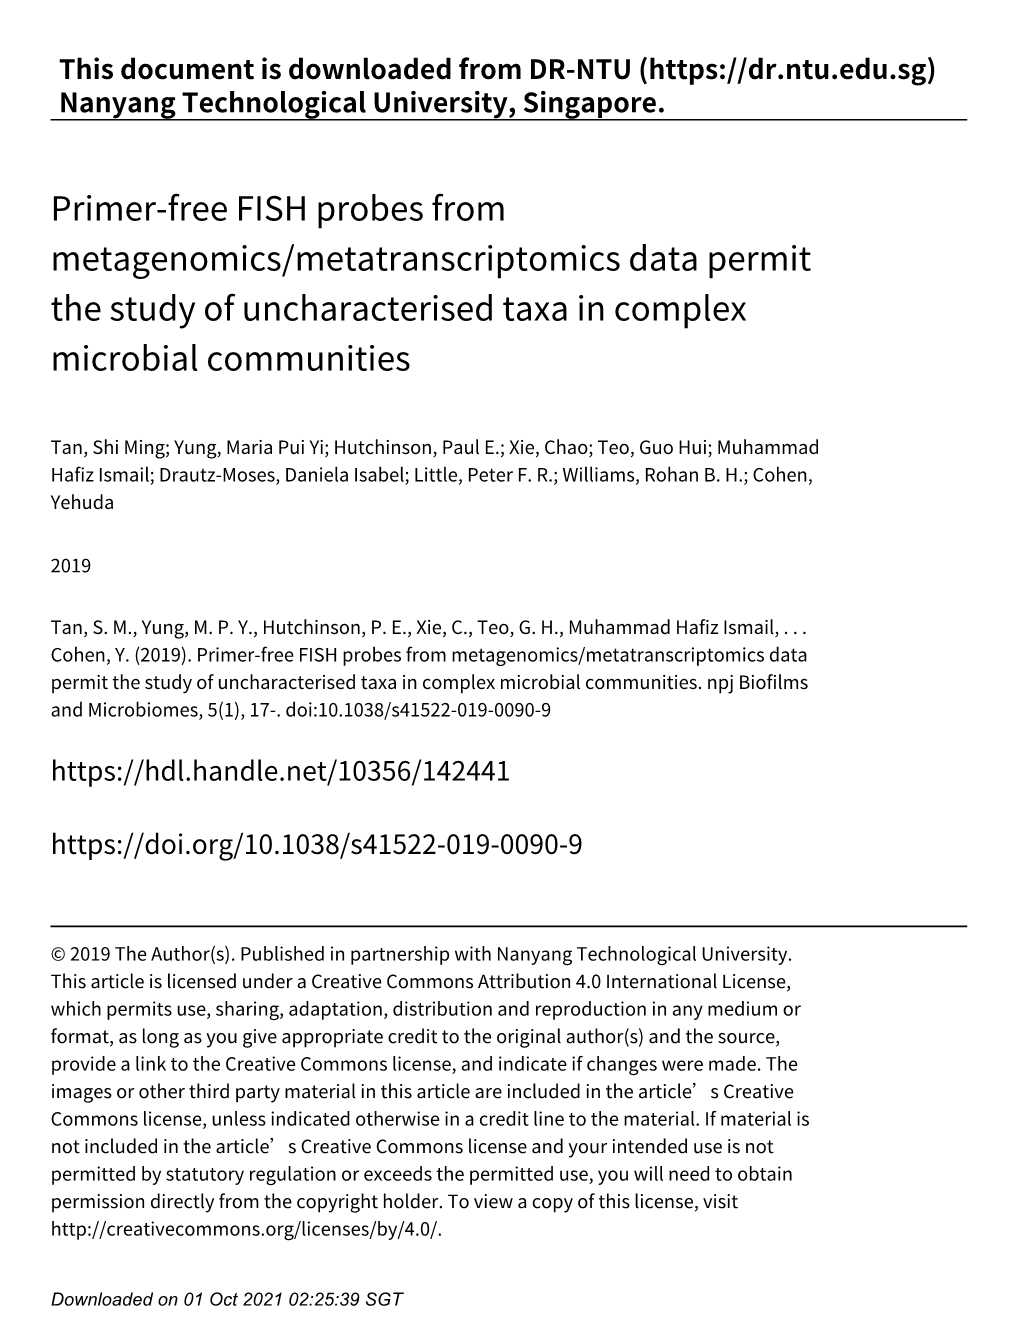 Primer‑Free FISH Probes from Metagenomics/Metatranscriptomics Data Permit the Study of Uncharacterised Taxa in Complex Microbial Communities